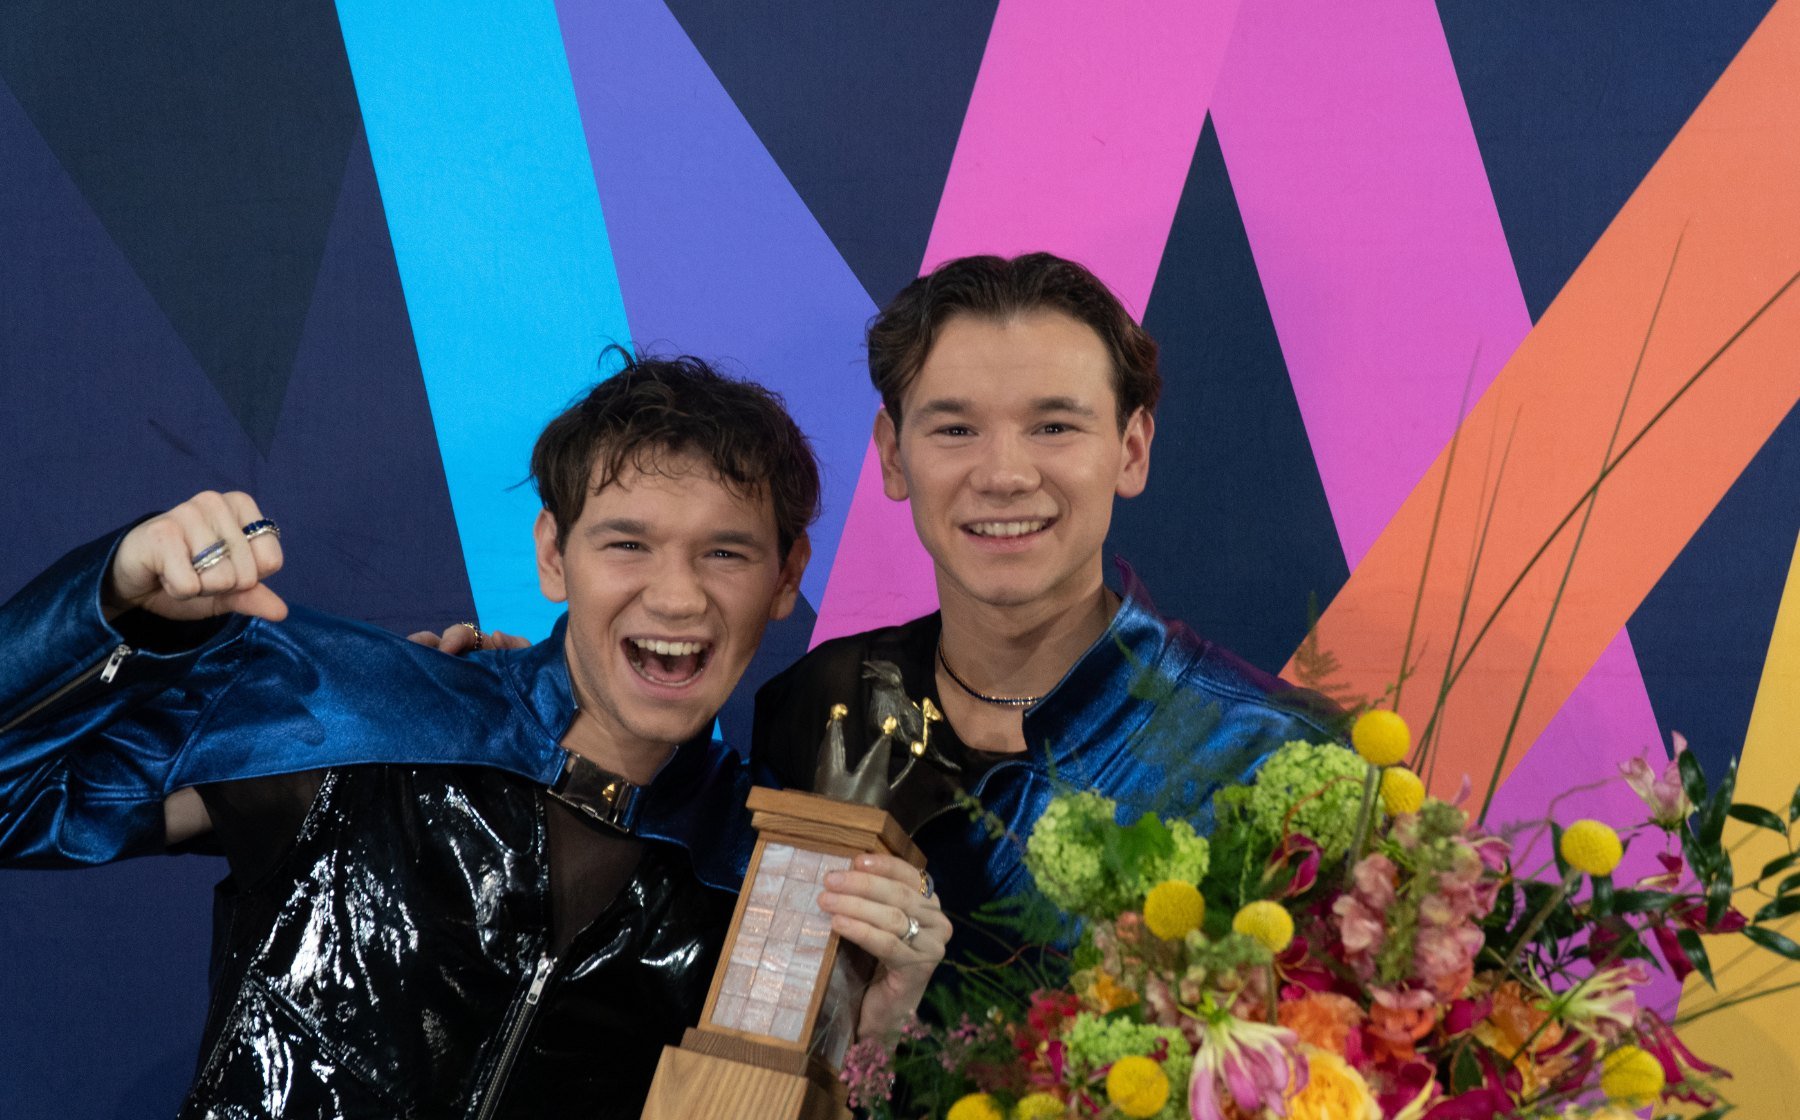 Norway's Marcus and Martinus winning Sweden's Melodifestivalen. Photo: L.Enochson / Wikipedia CC.